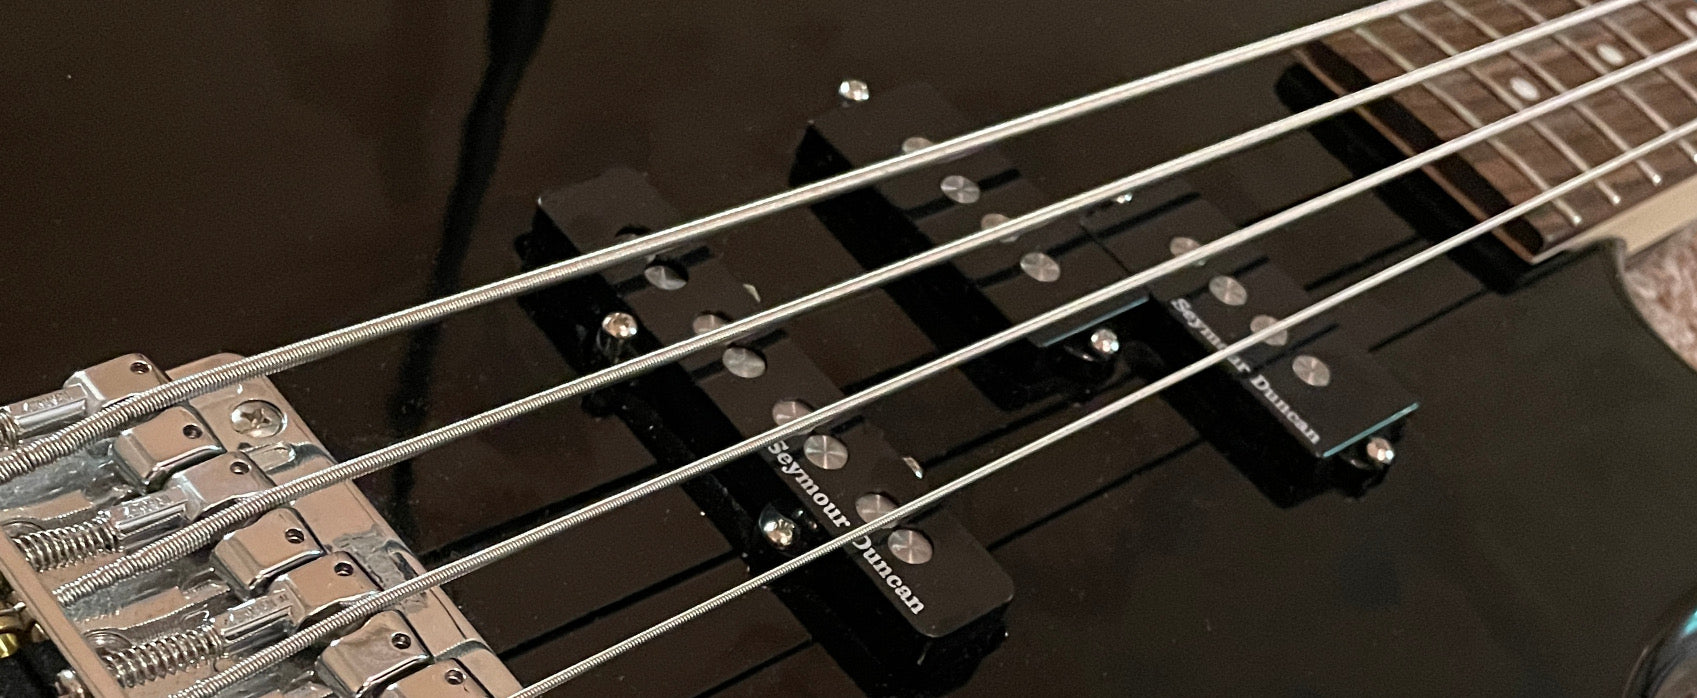 Review of Seymour Duncan Quarter Pounder PJ Bass Pickups